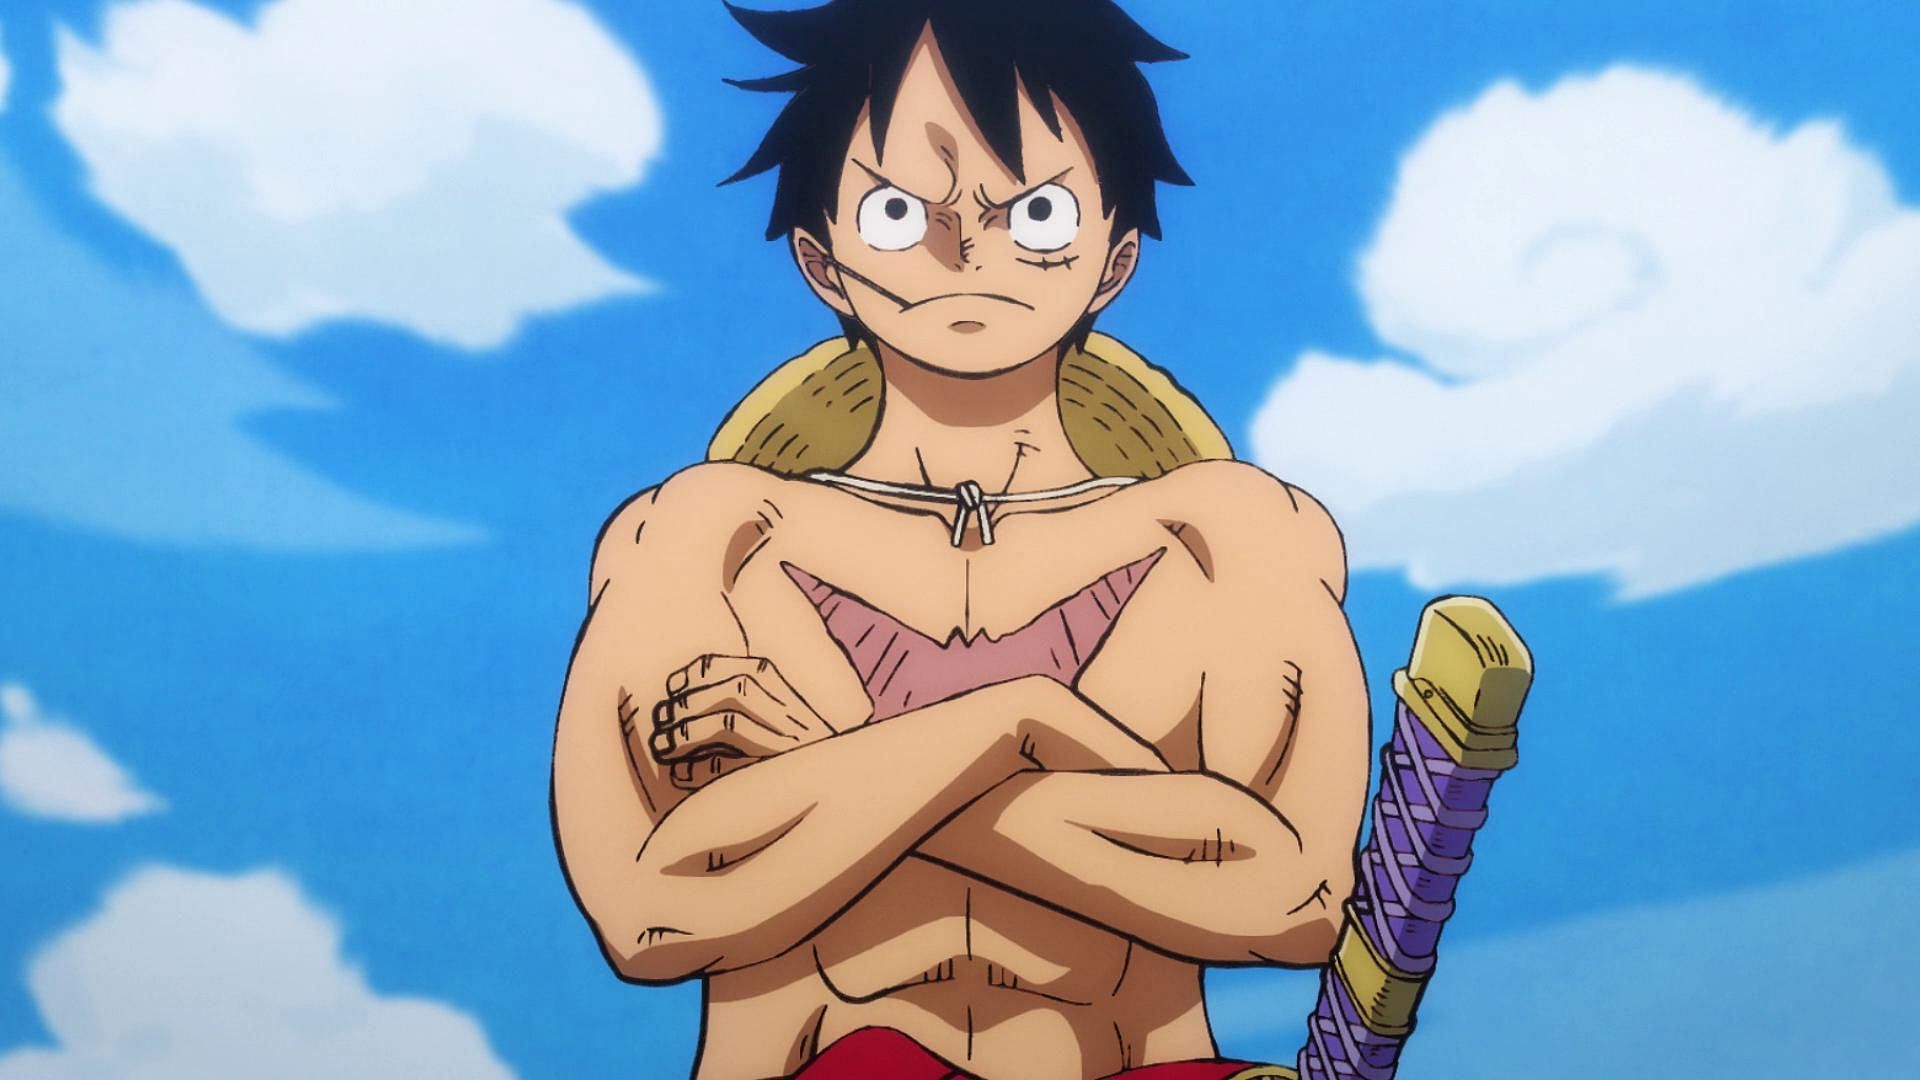 Luffy as seen in the One Piece anime (Image Credits: Eiichiro Oda/Shueisha, Viz Media, One Piece)